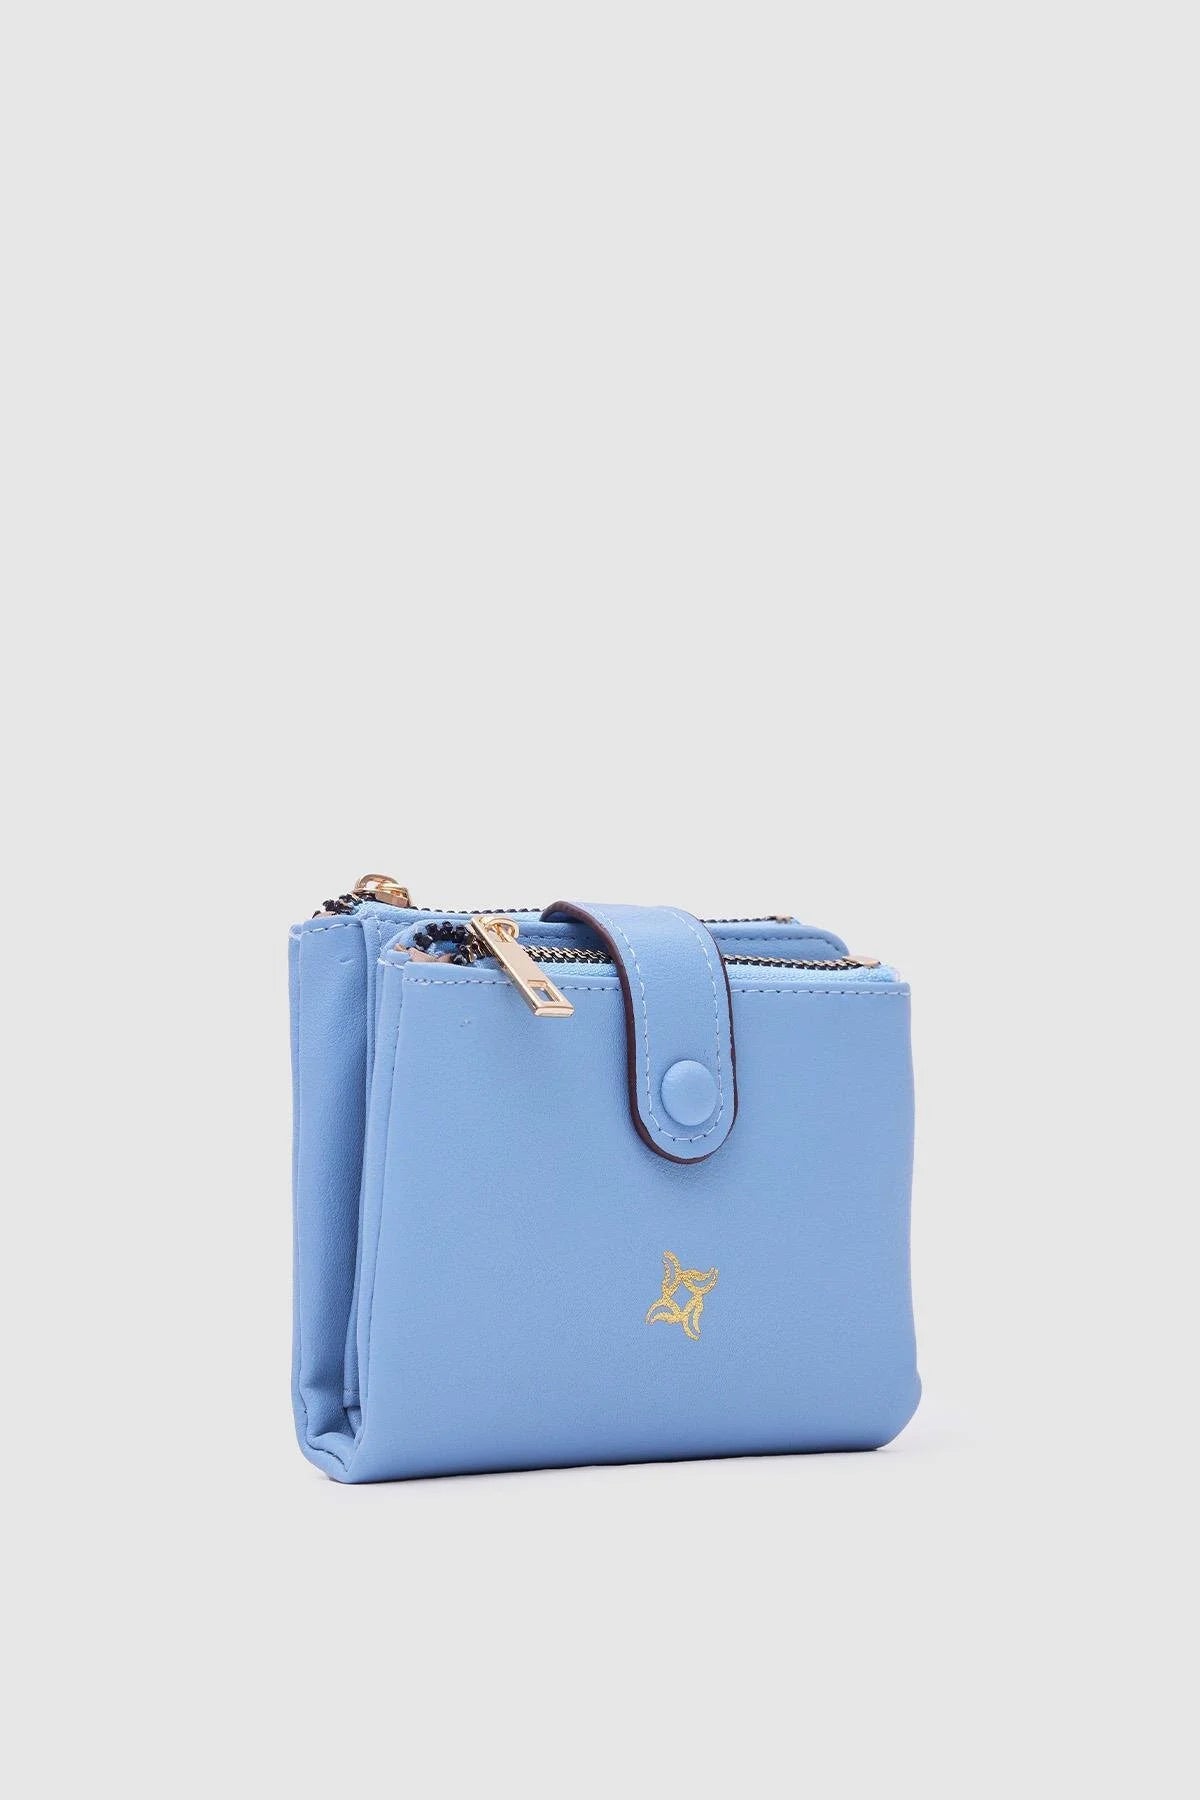 Soft Leather Blue Wallet wallet LUNARITY GARAGE   